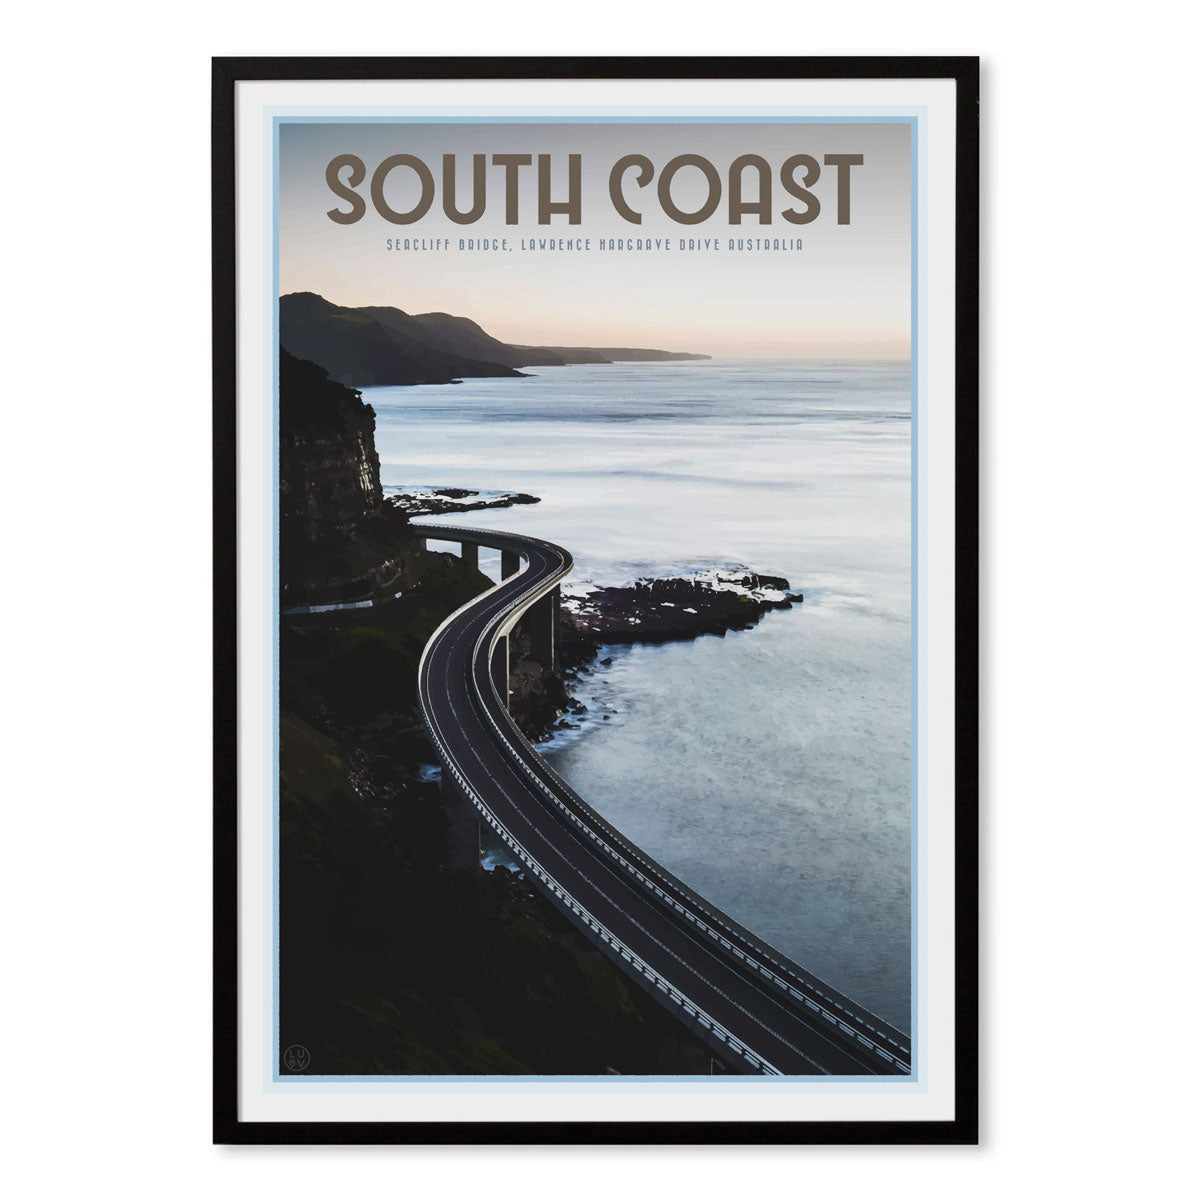 South coast seacliff bridge black framed art print by places we luv